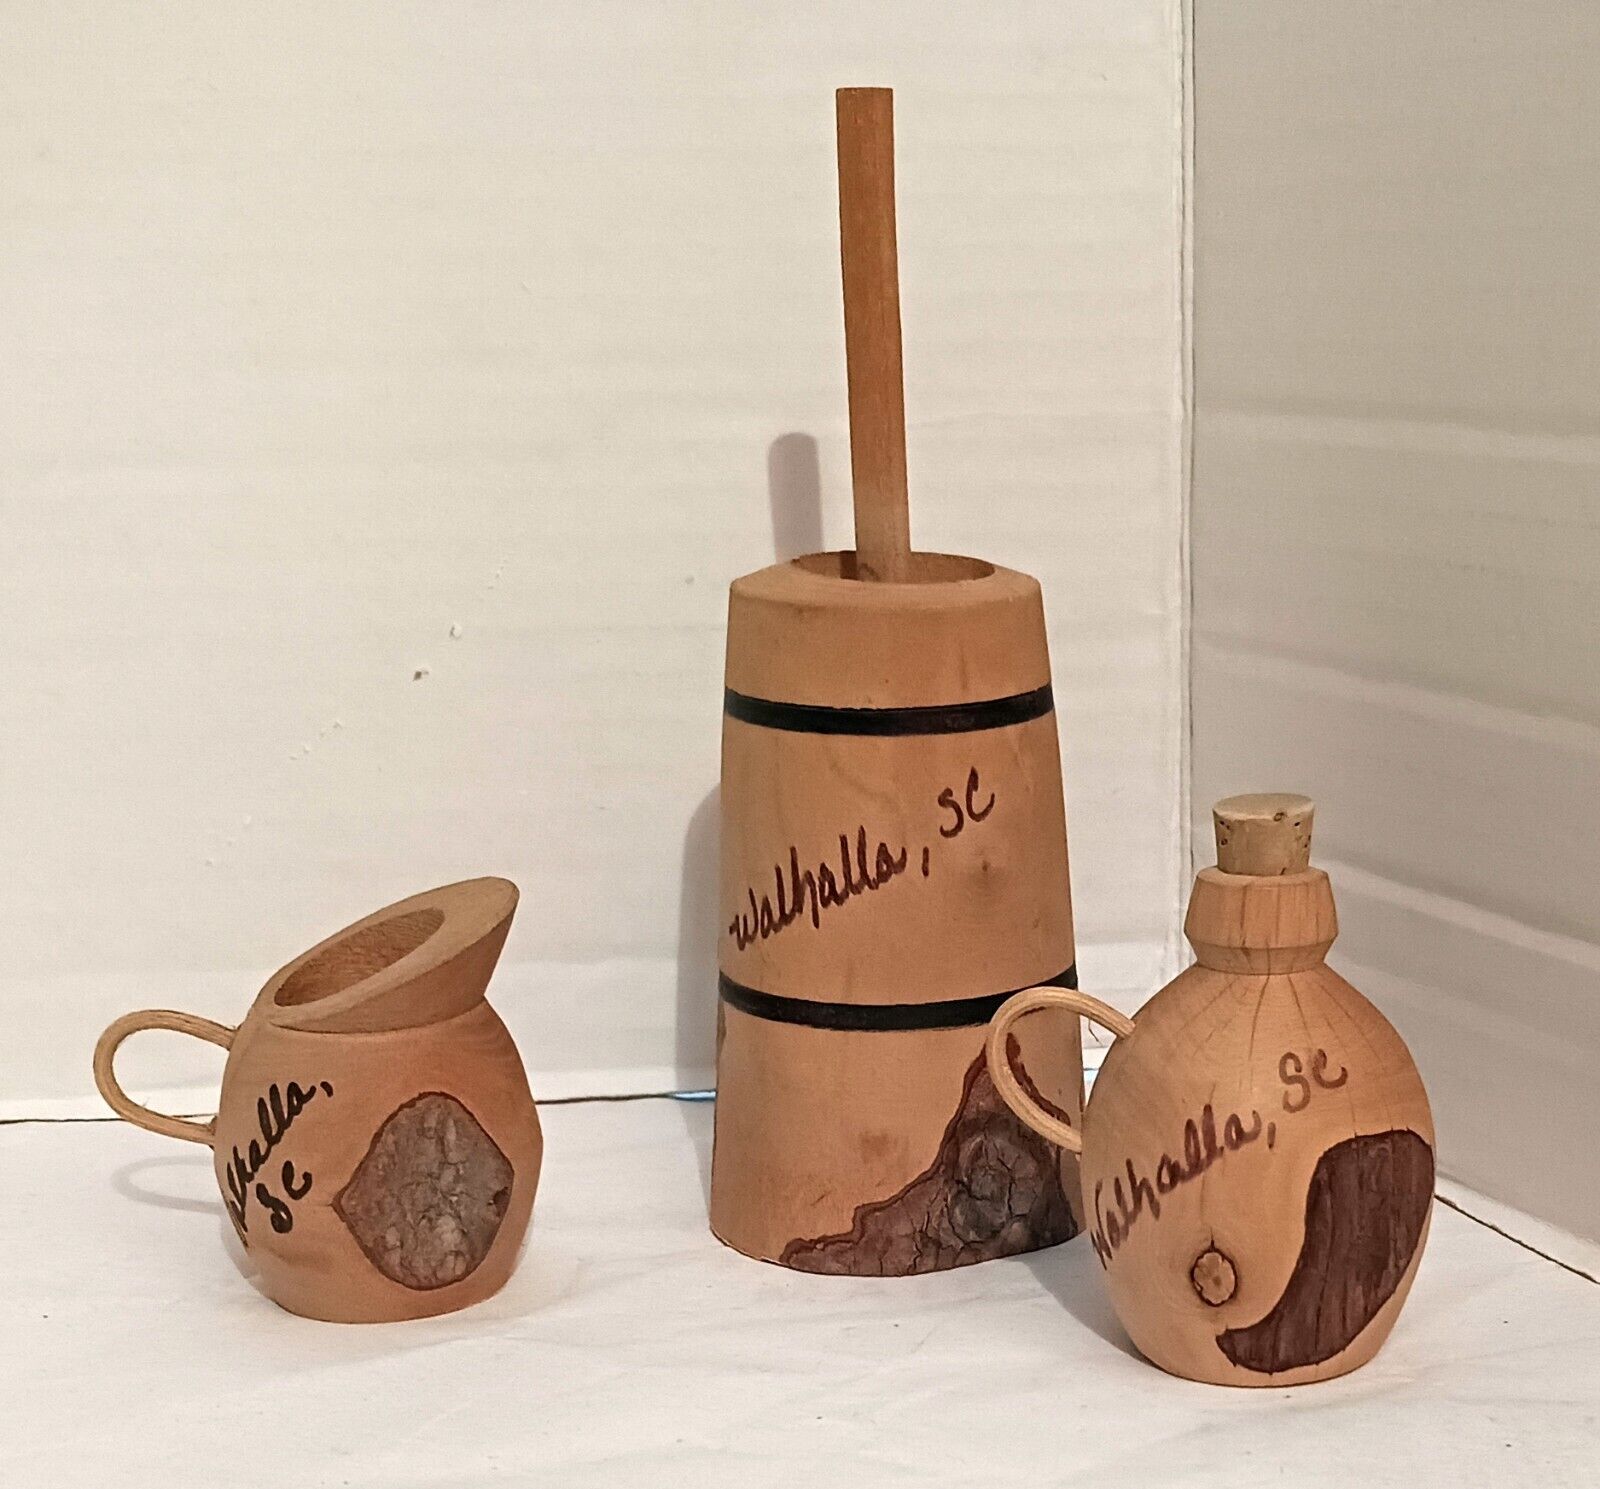 Walhalla South Carolina Wood Miniature Souvenirs Pitcher Butter Churn Corked Jug